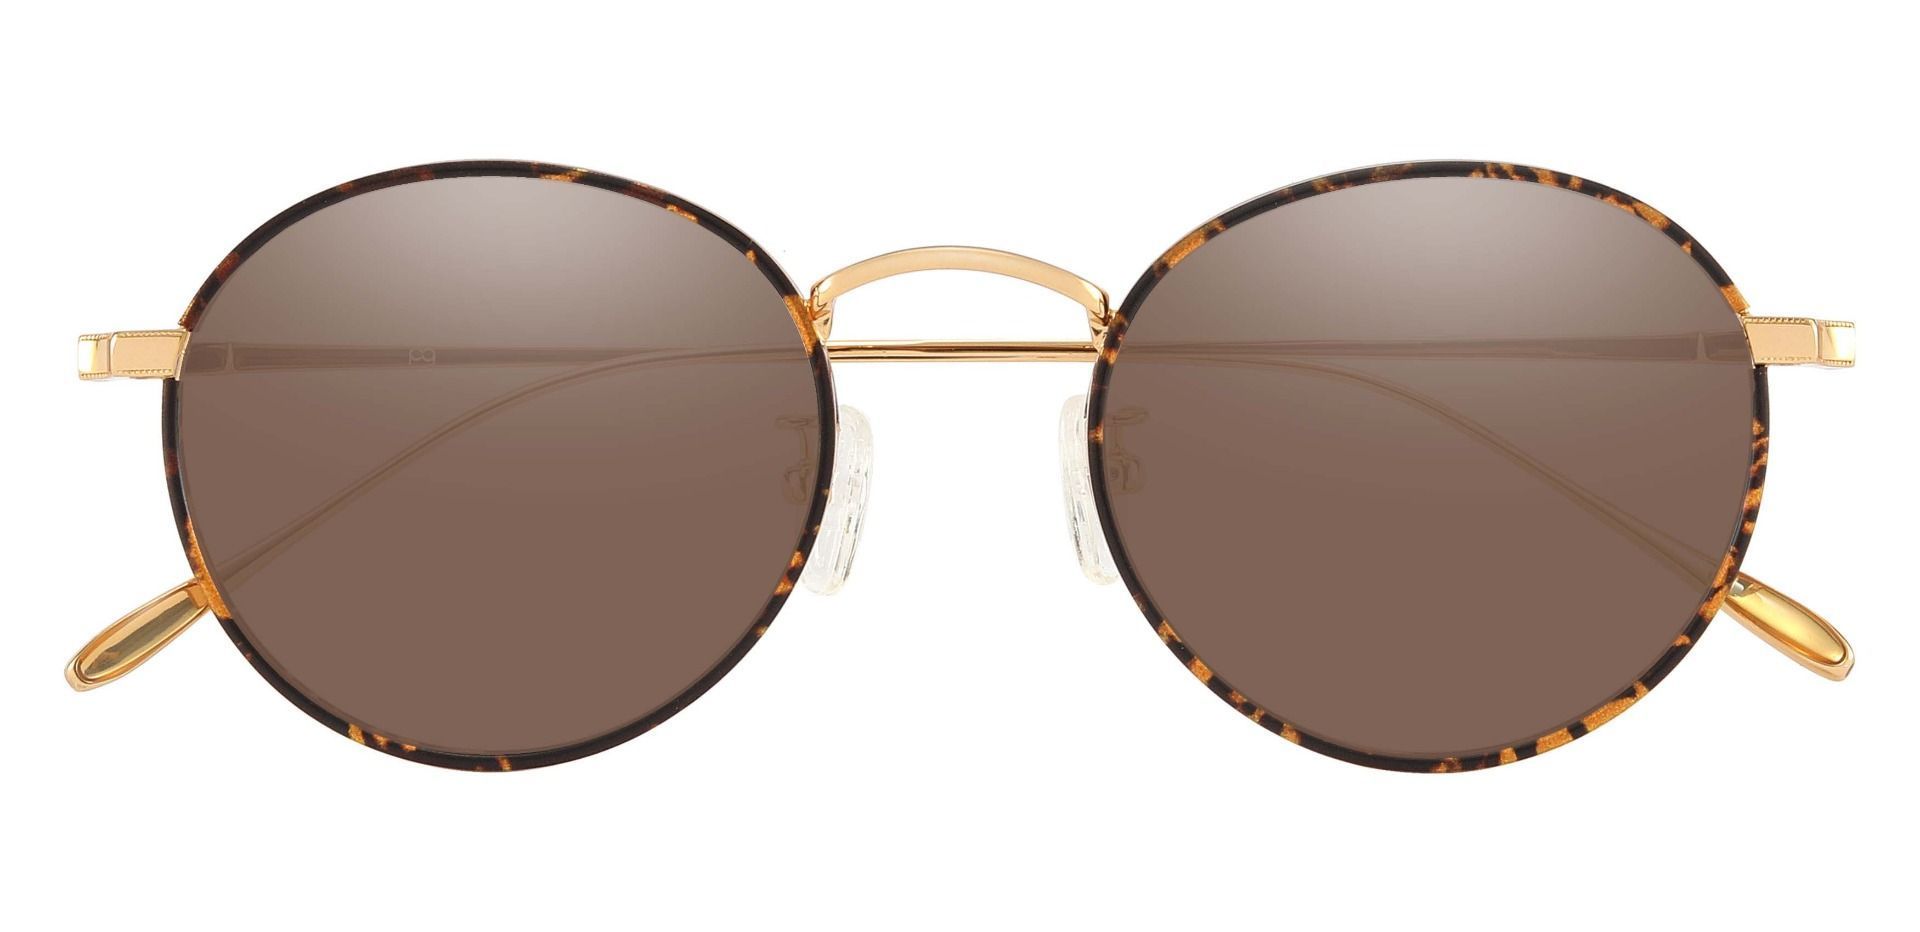 Cornwall Oval Prescription Sunglasses - Tortoise Frame With Brown Lenses